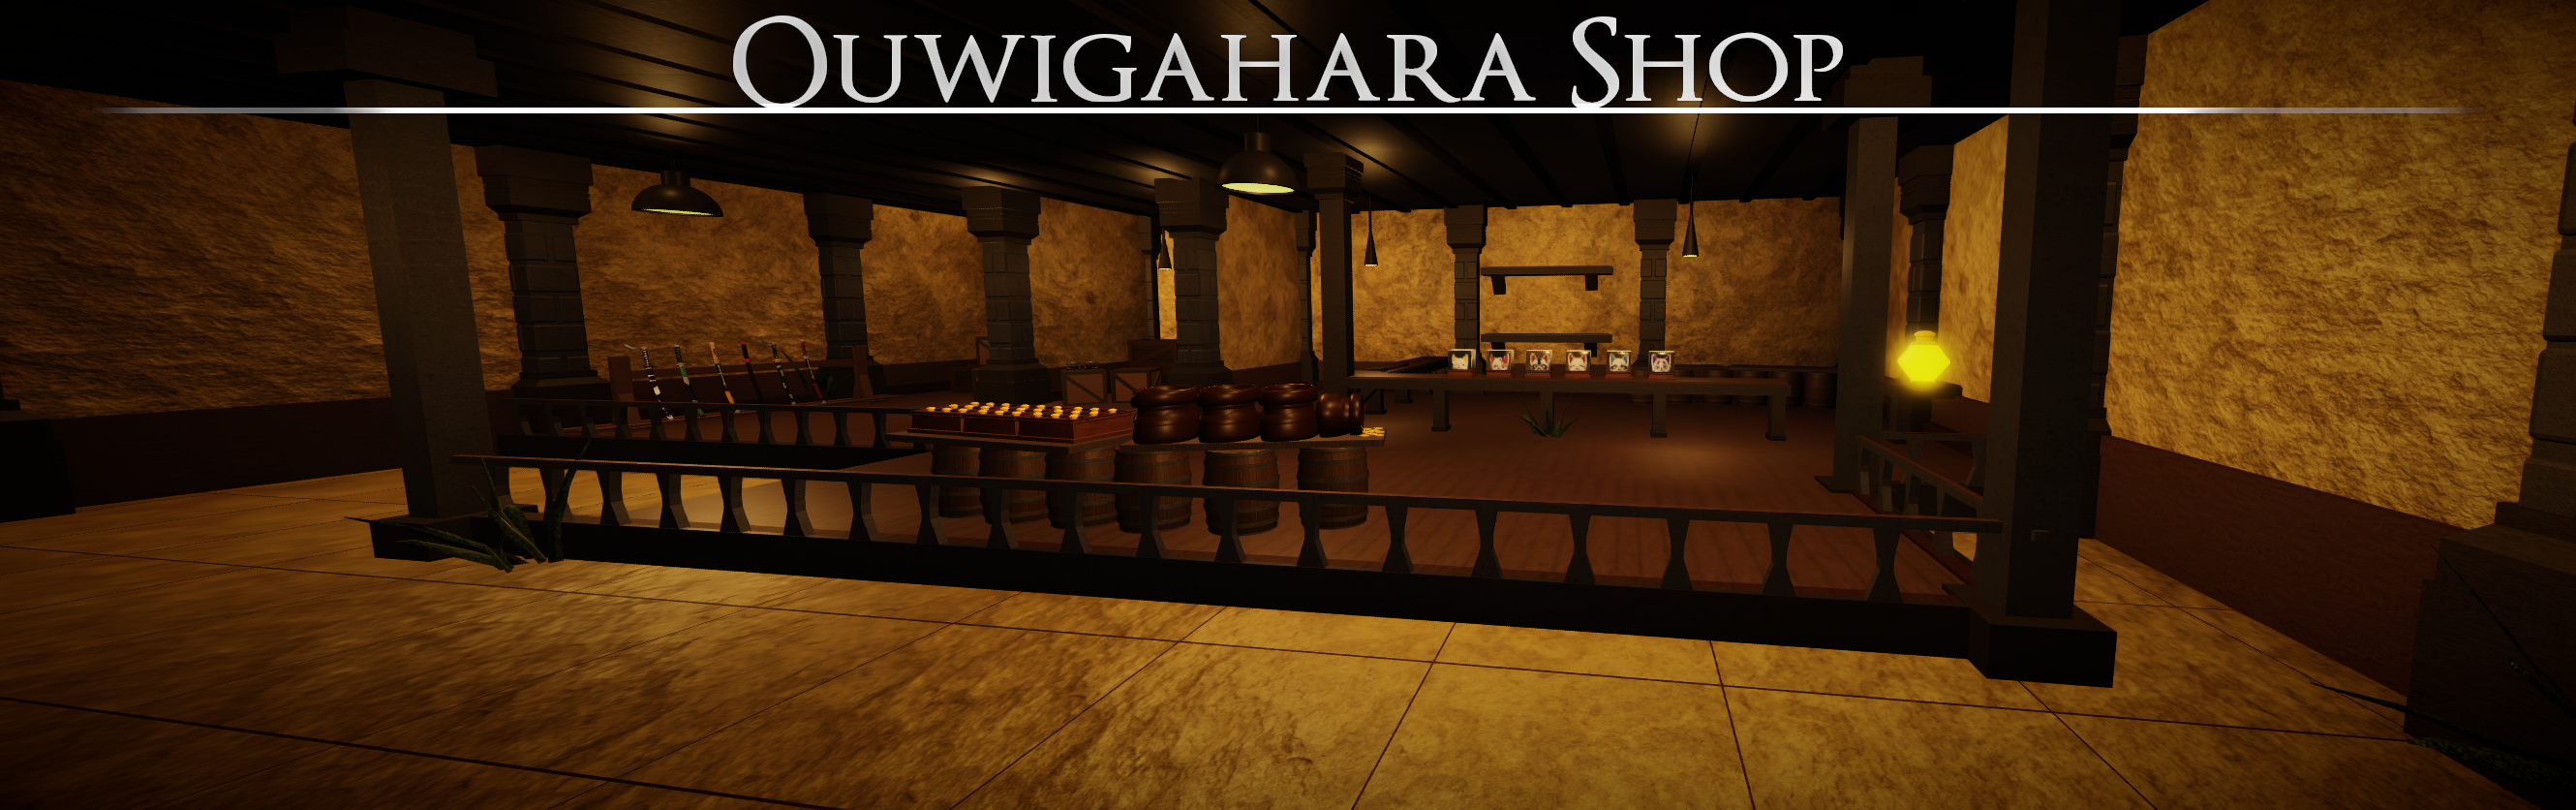 Ouwigahara Shop  Project Slayers 